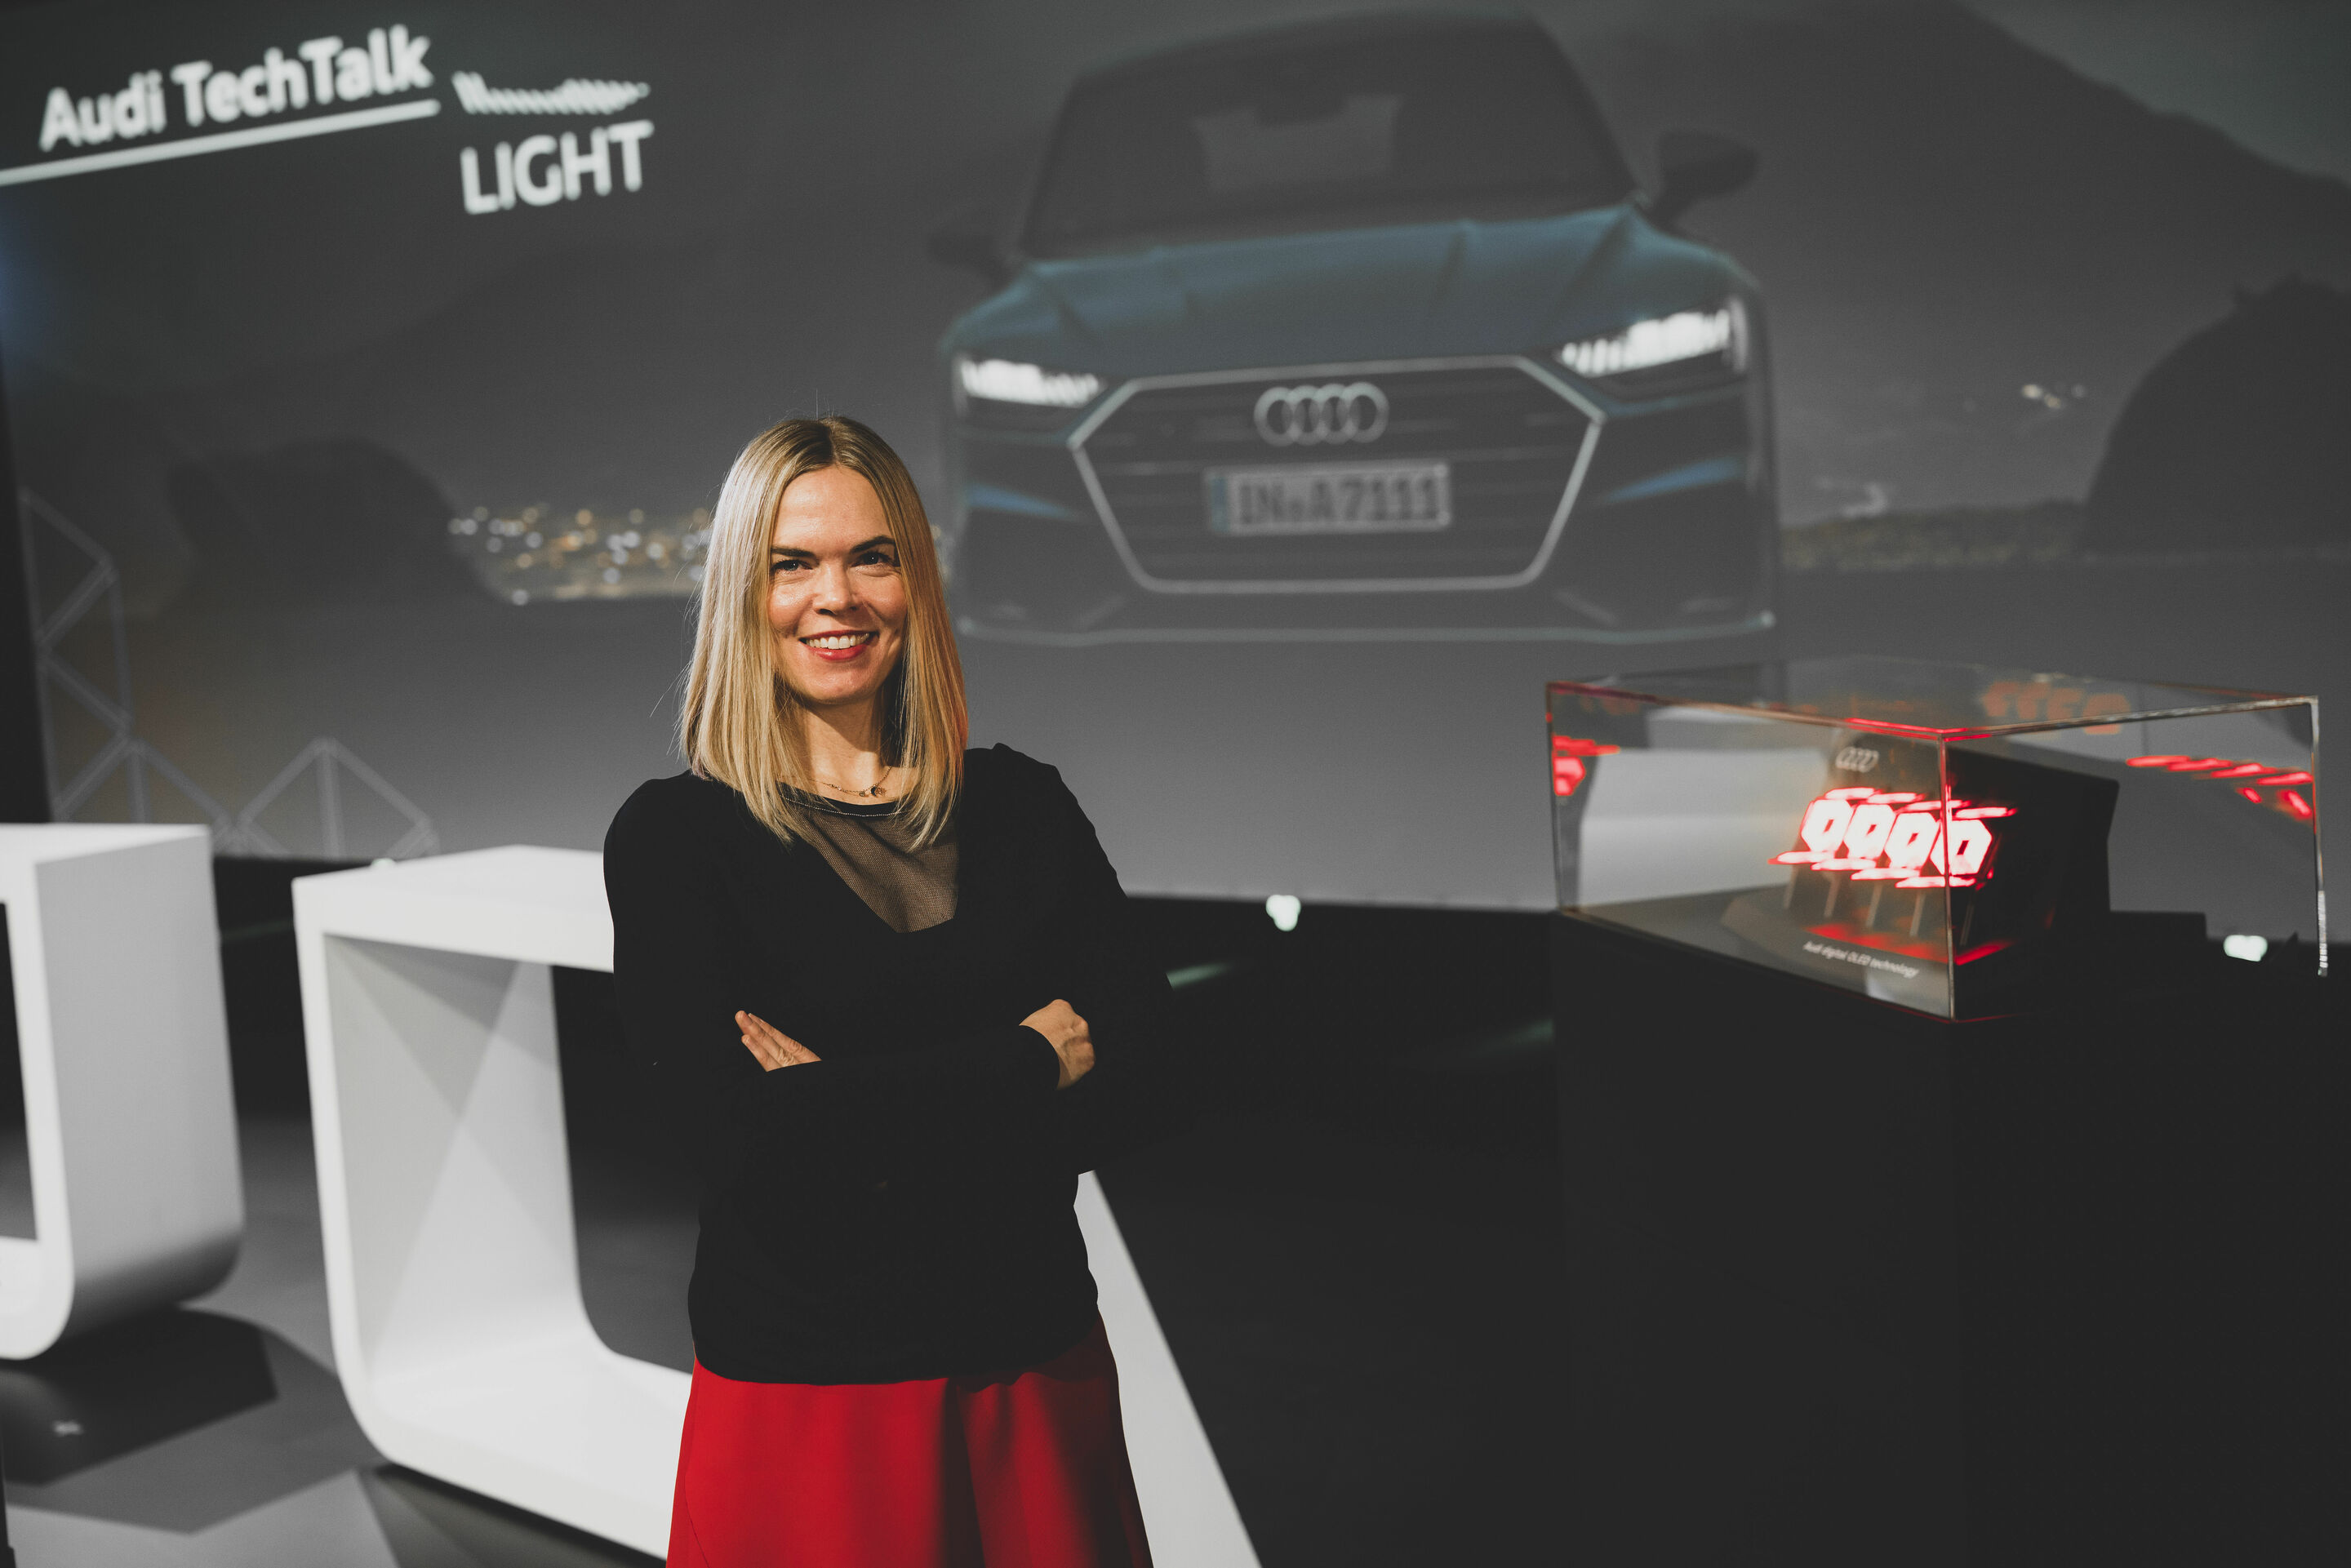 Audi TechTalk: Light